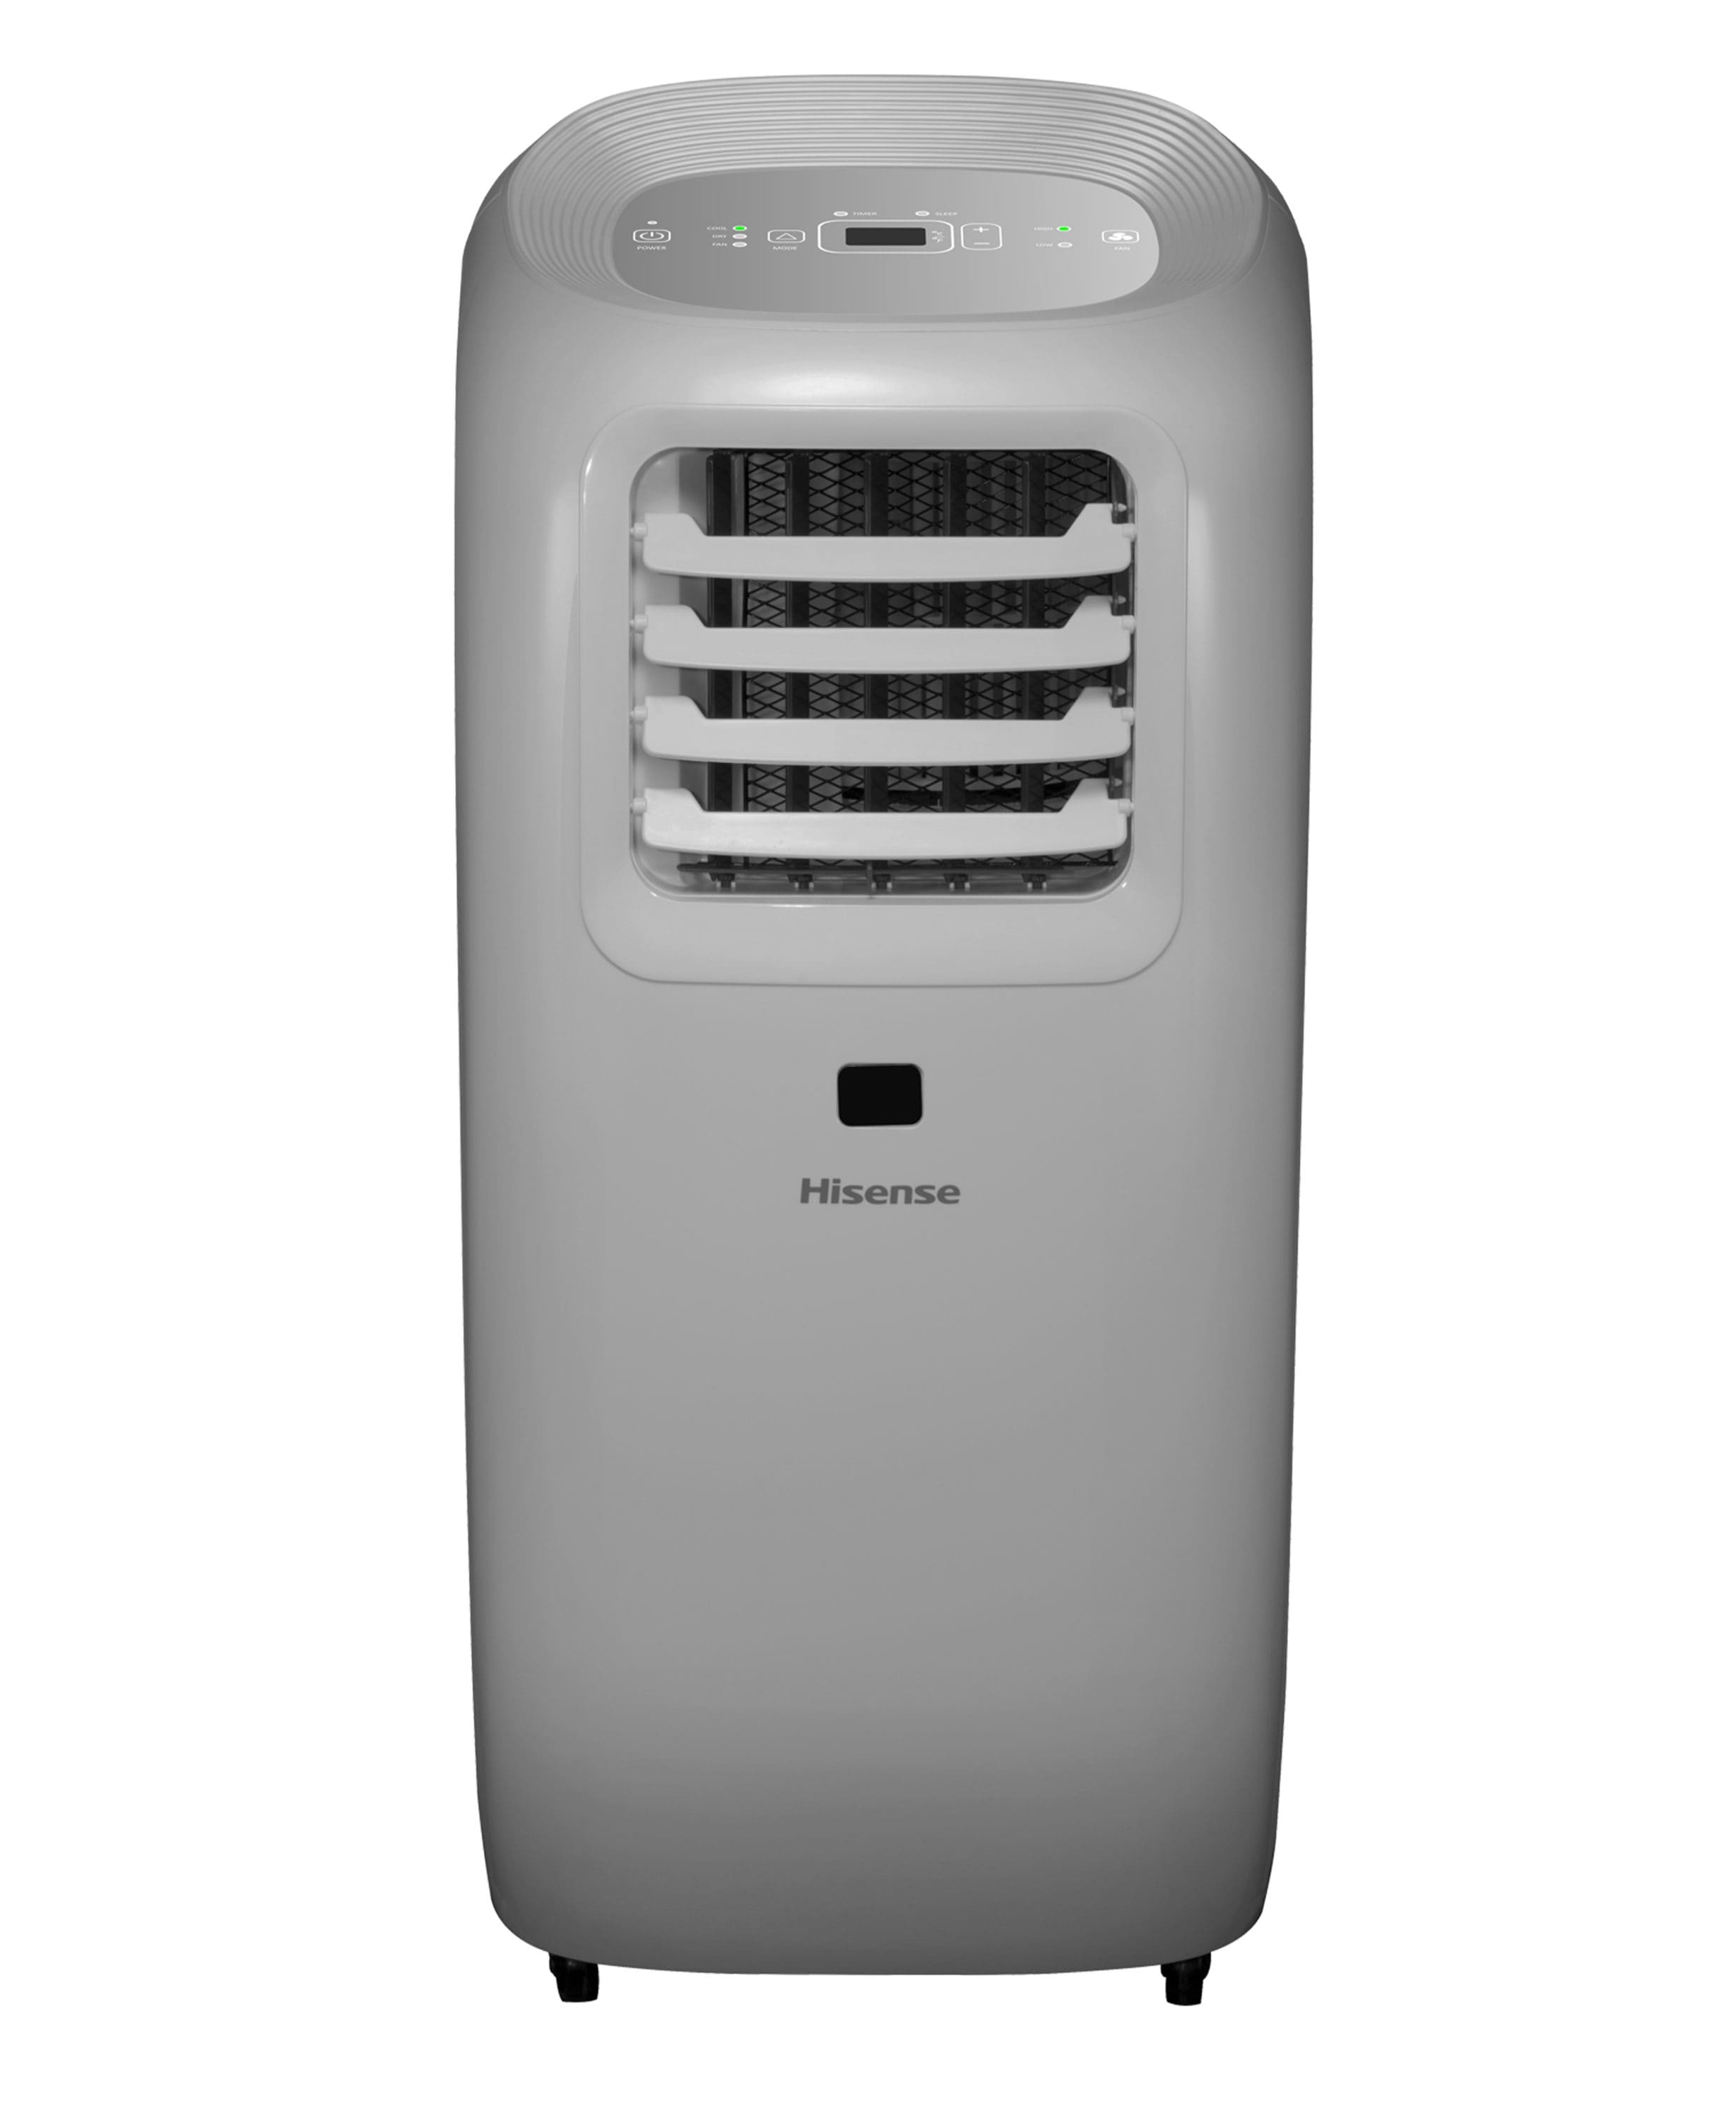 Air hisense conditioner portable Best hisense